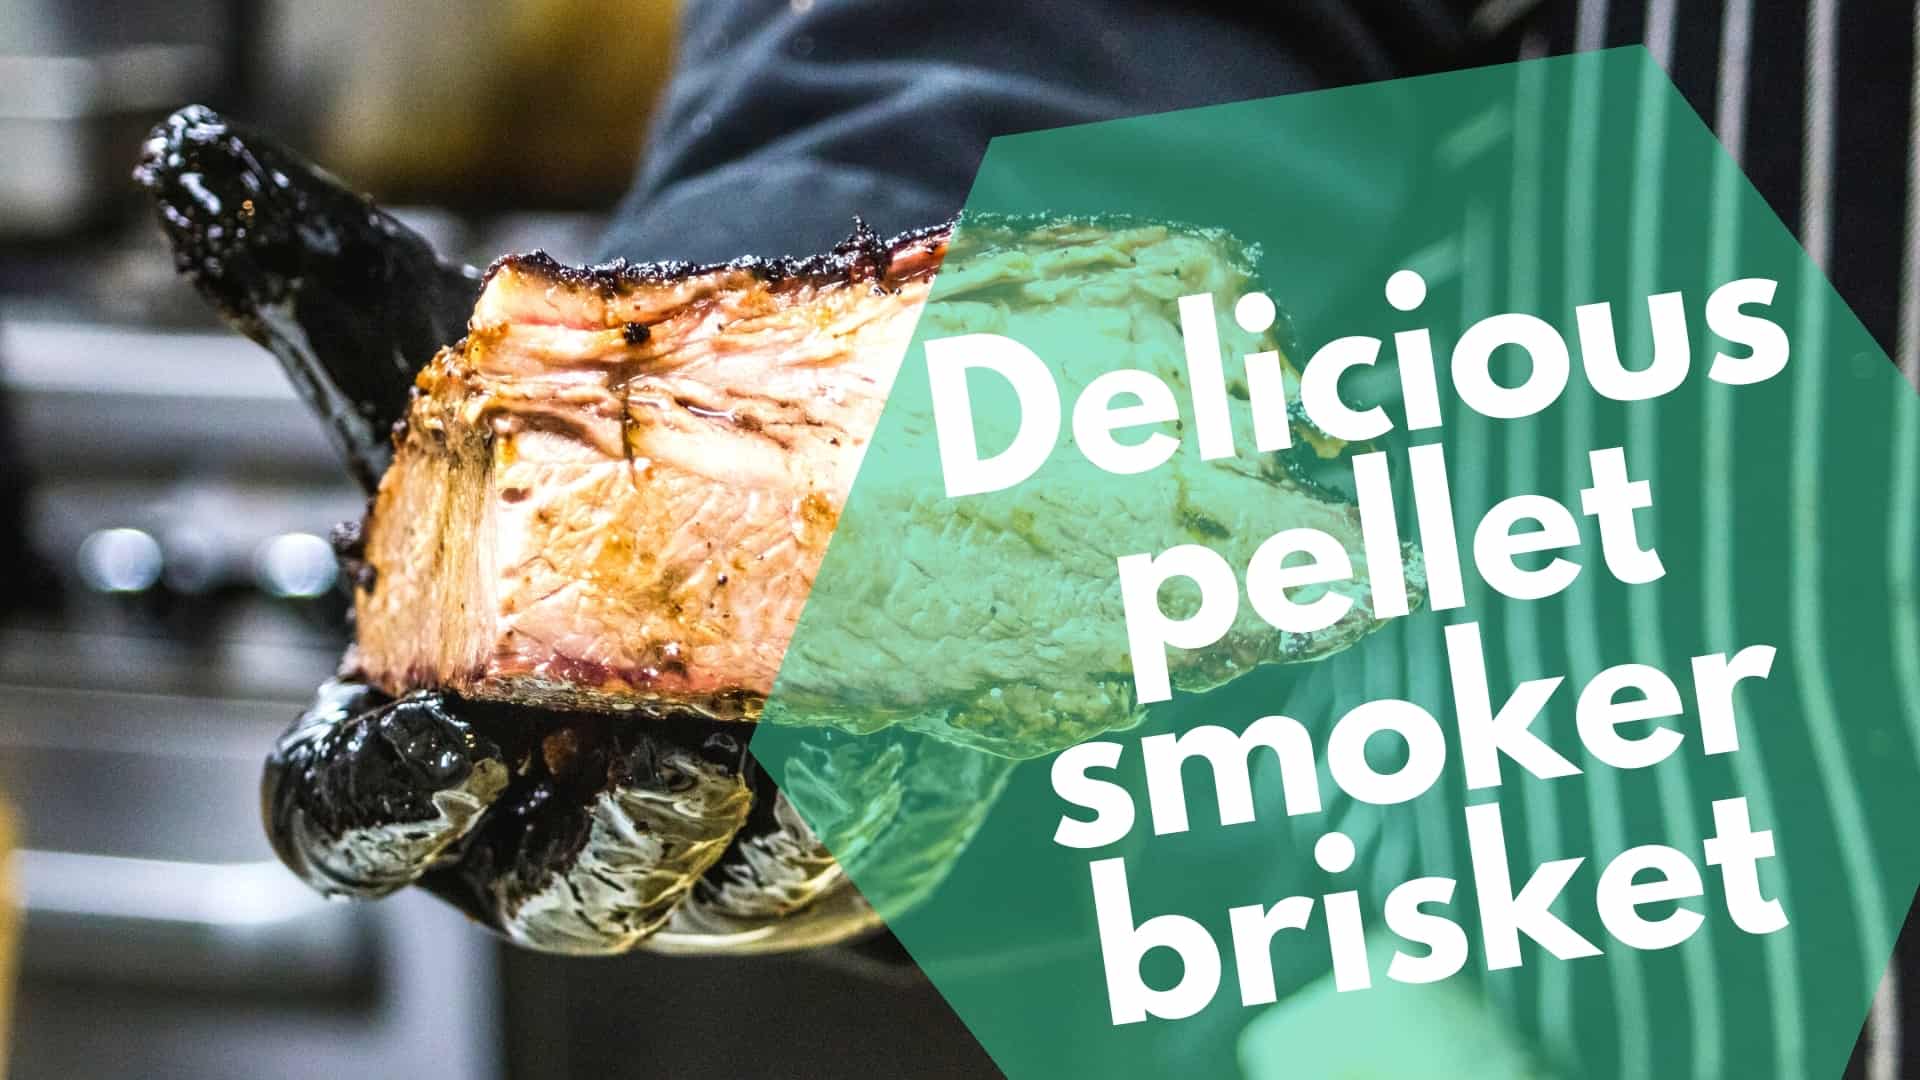 Pellet smoker brisket | Great recipe & cooking tips